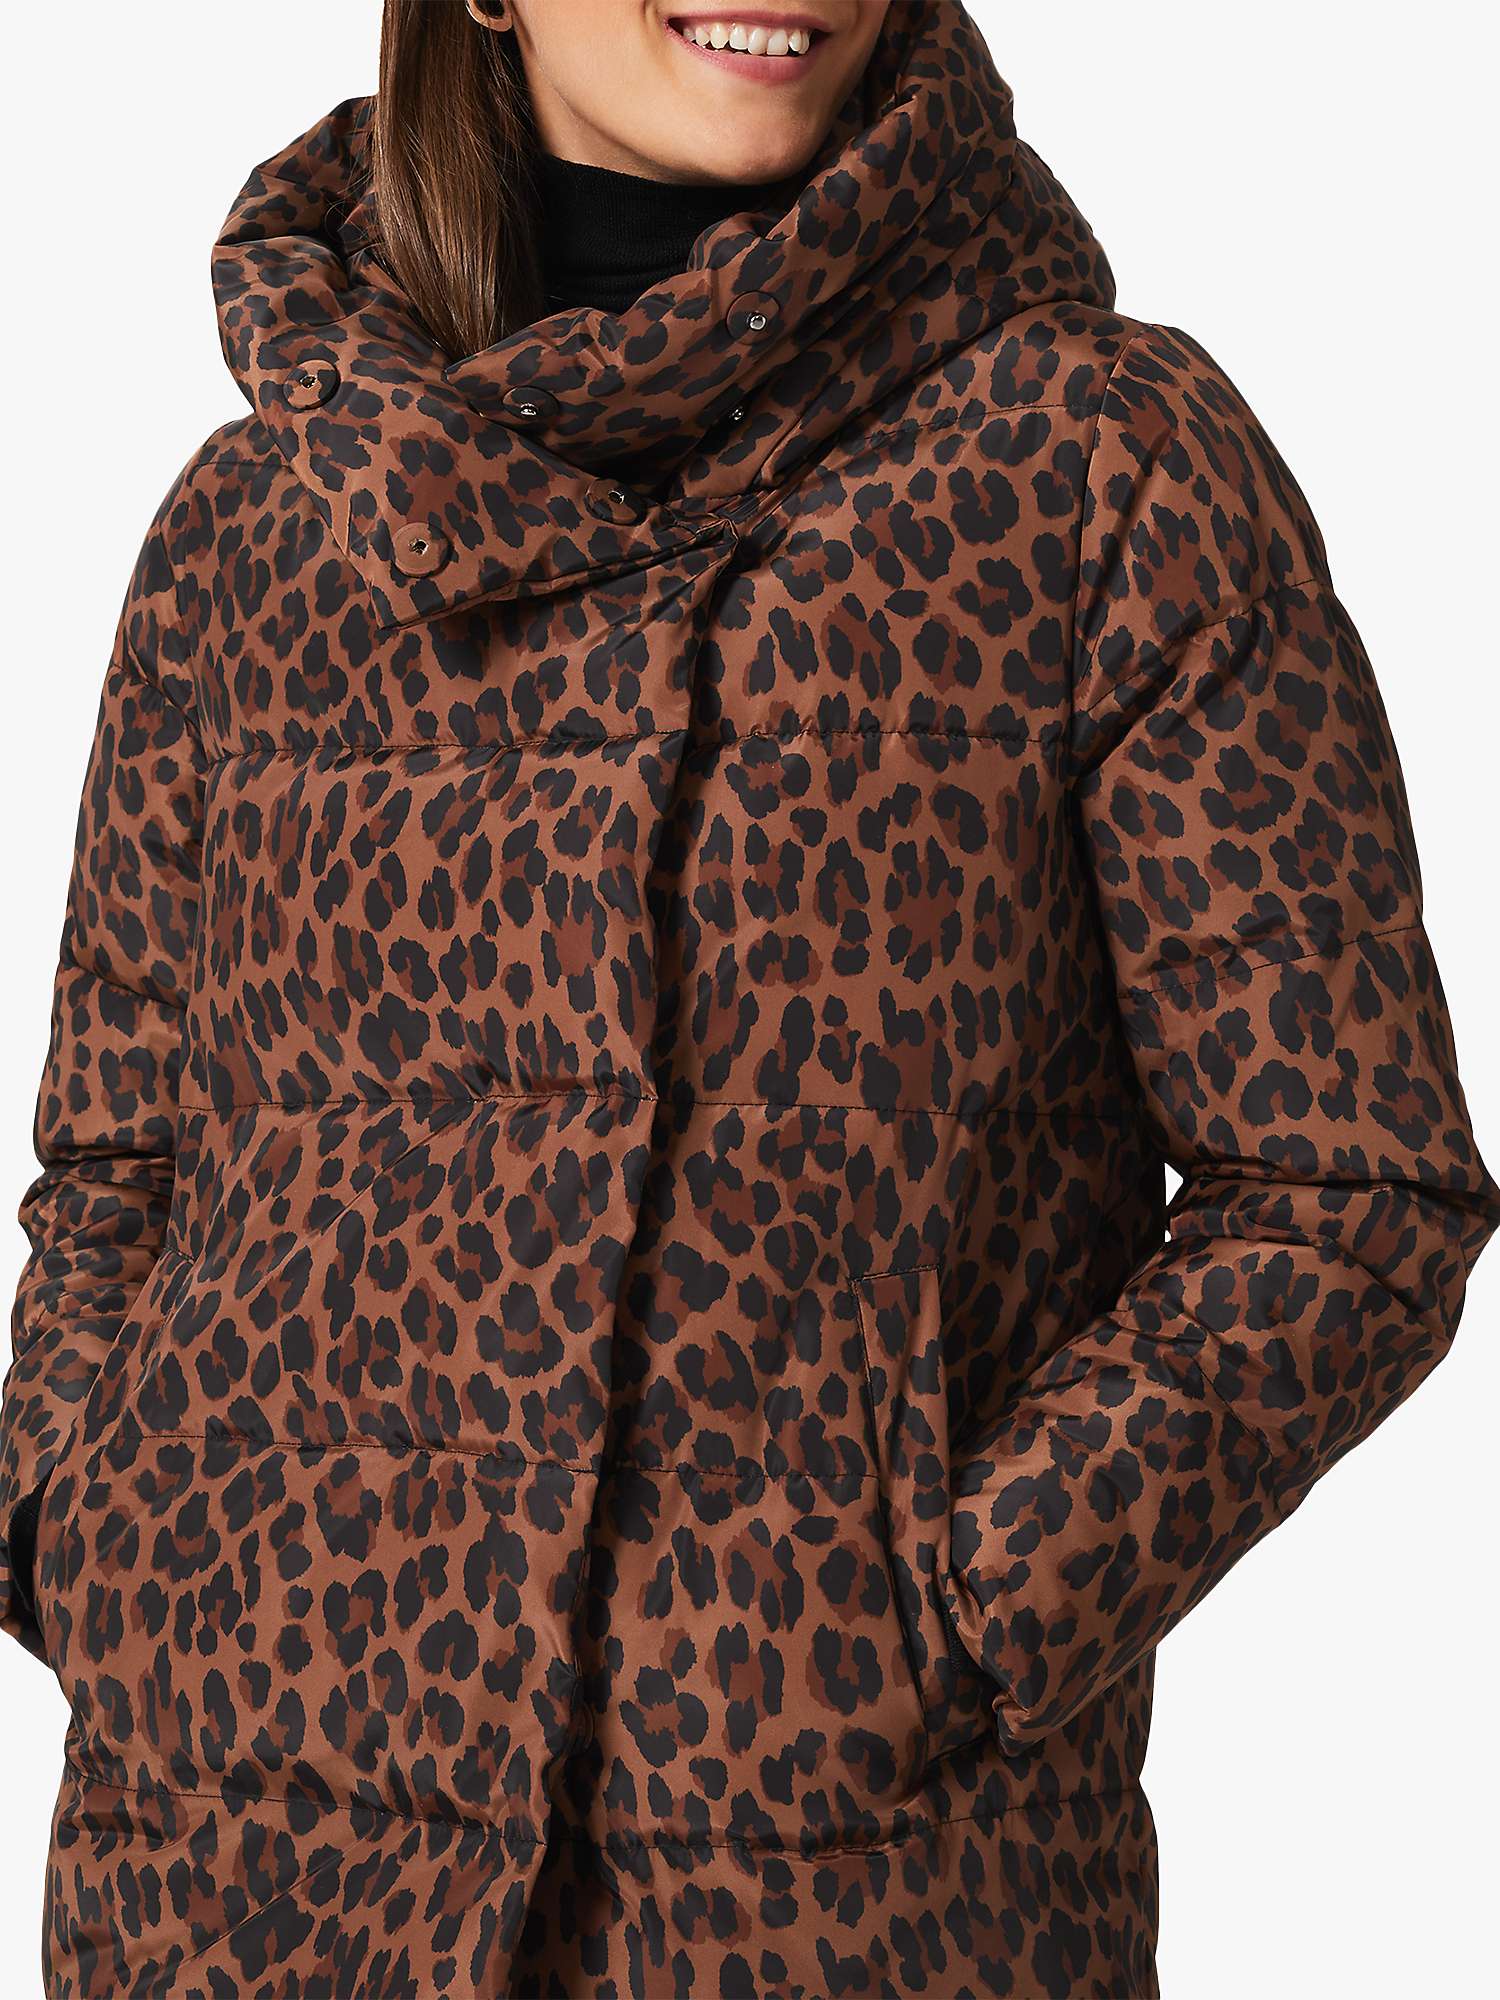 Hobbs Heather Leopard Print Puffer Jacket, Camel at John Lewis & Partners